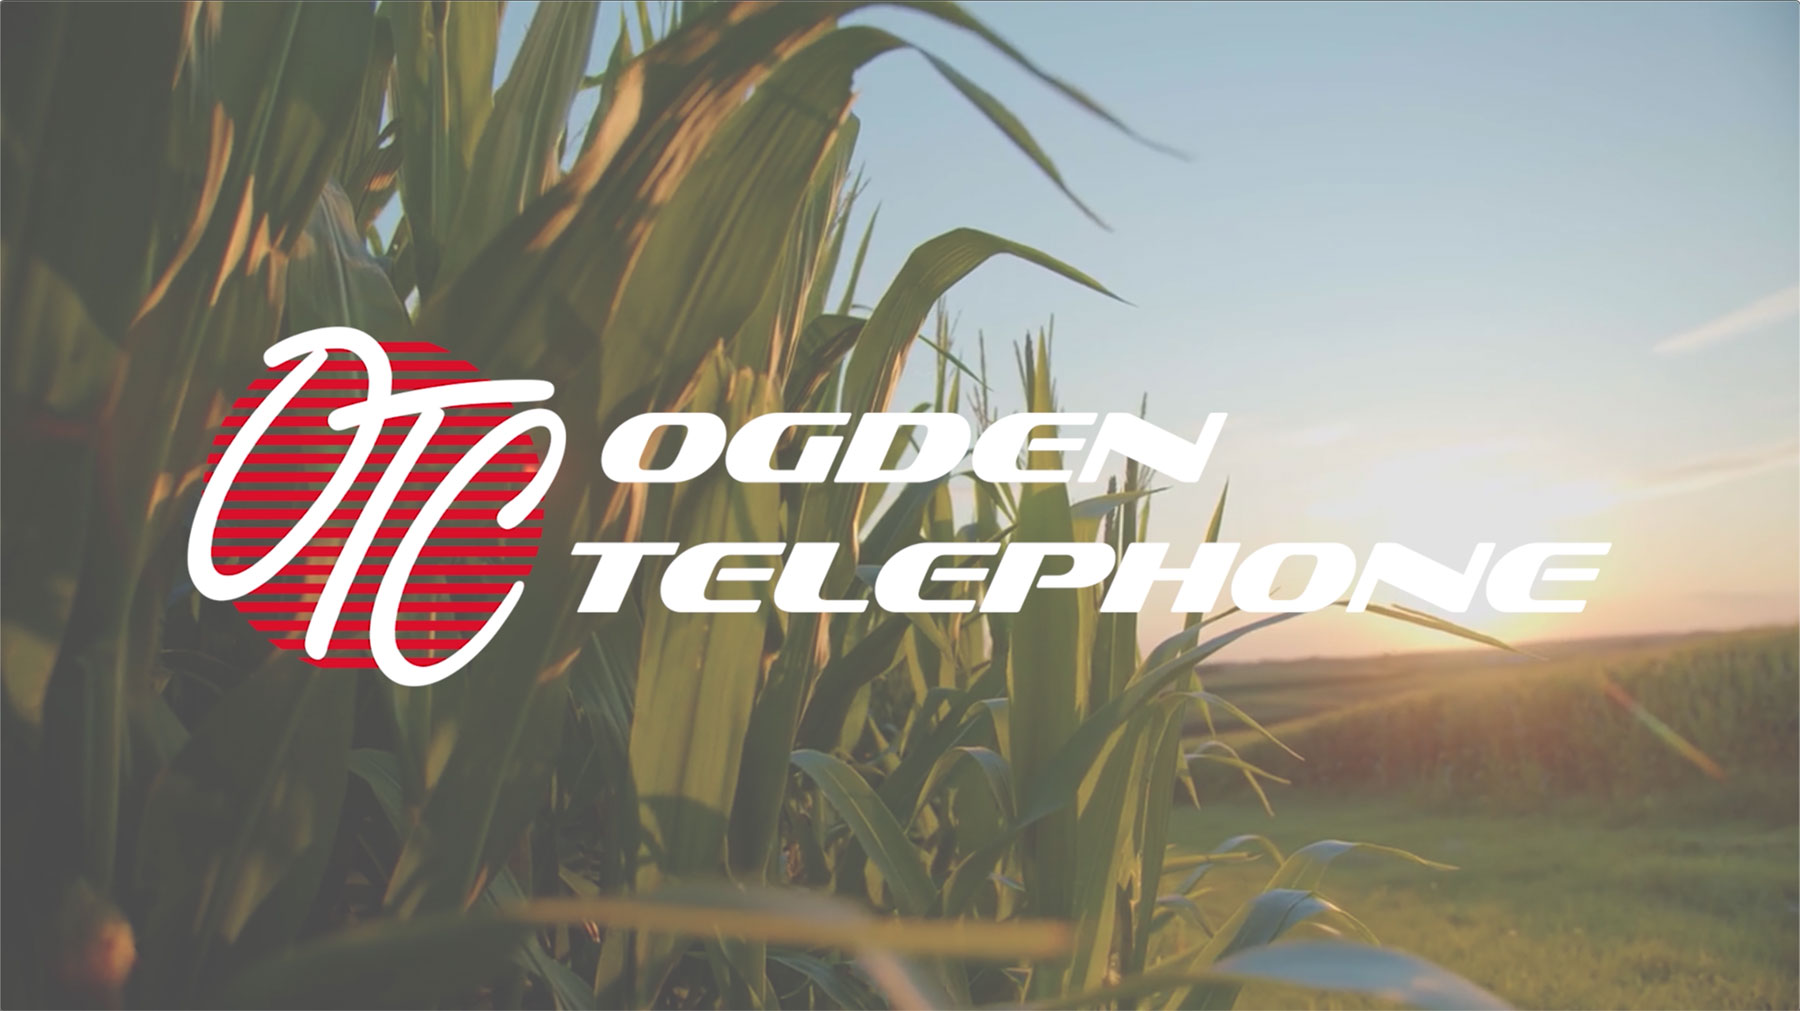 Ogden Telephone logo on corn field background